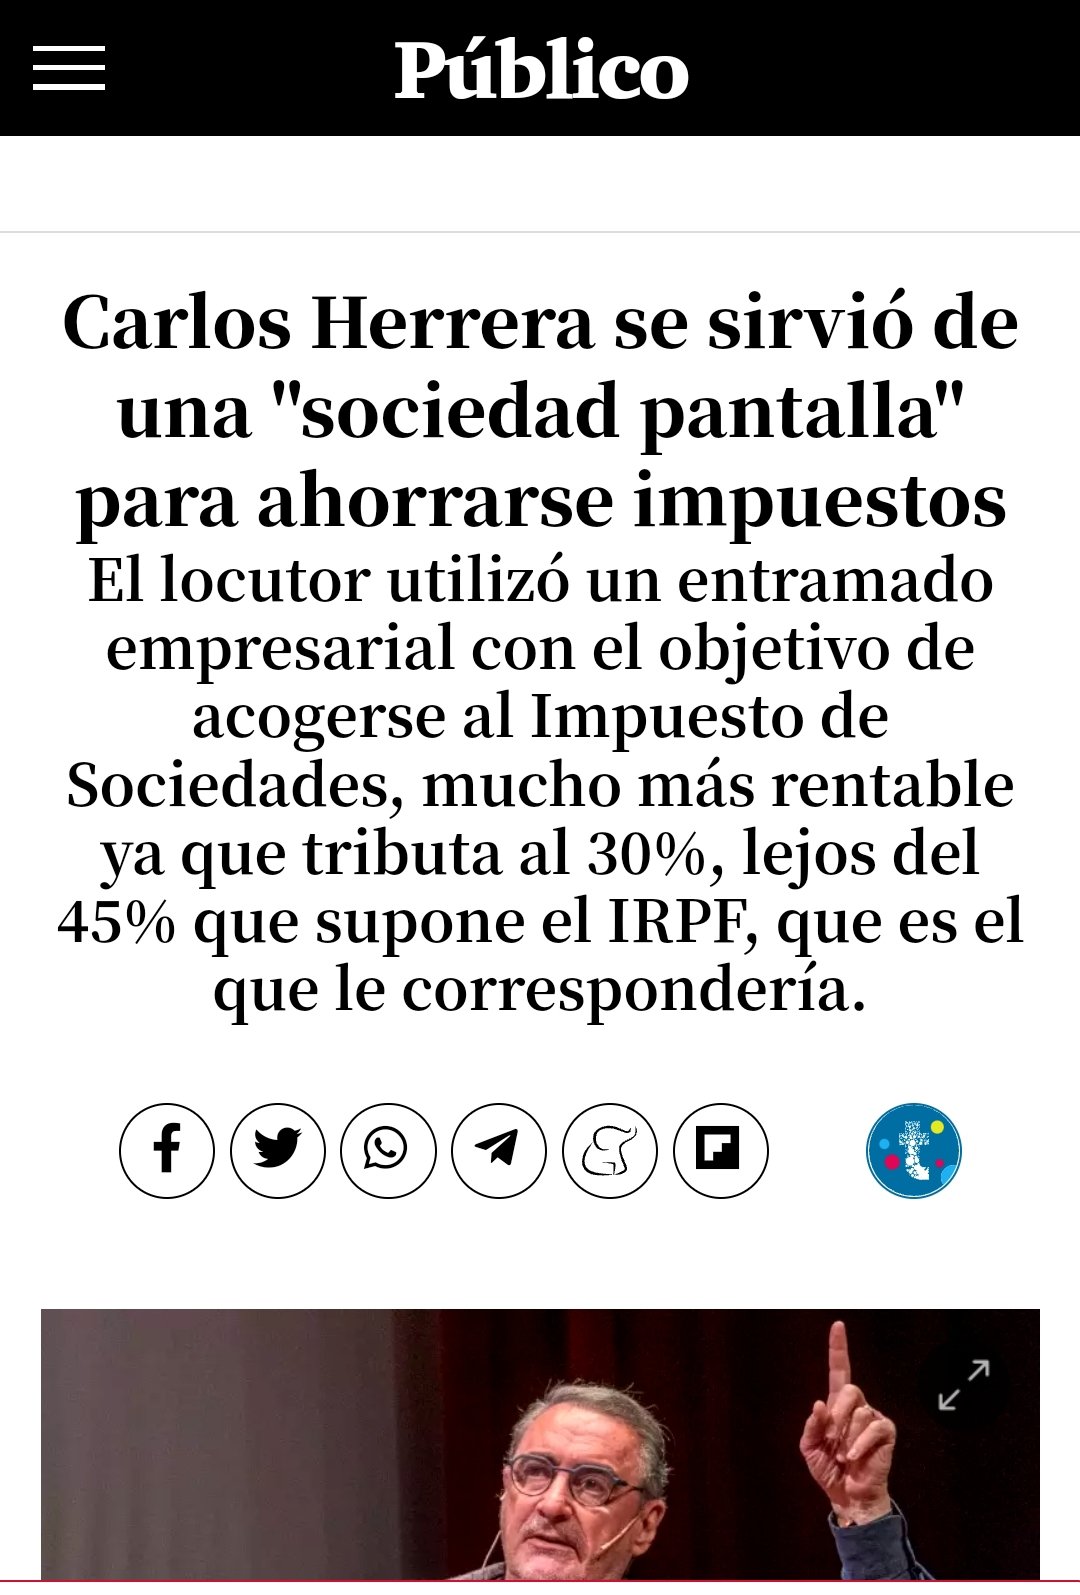 Carlos Herrera ¿esto es un periodista? - Página 11 F2W2famWYAArHyM?format=jpg&name=large